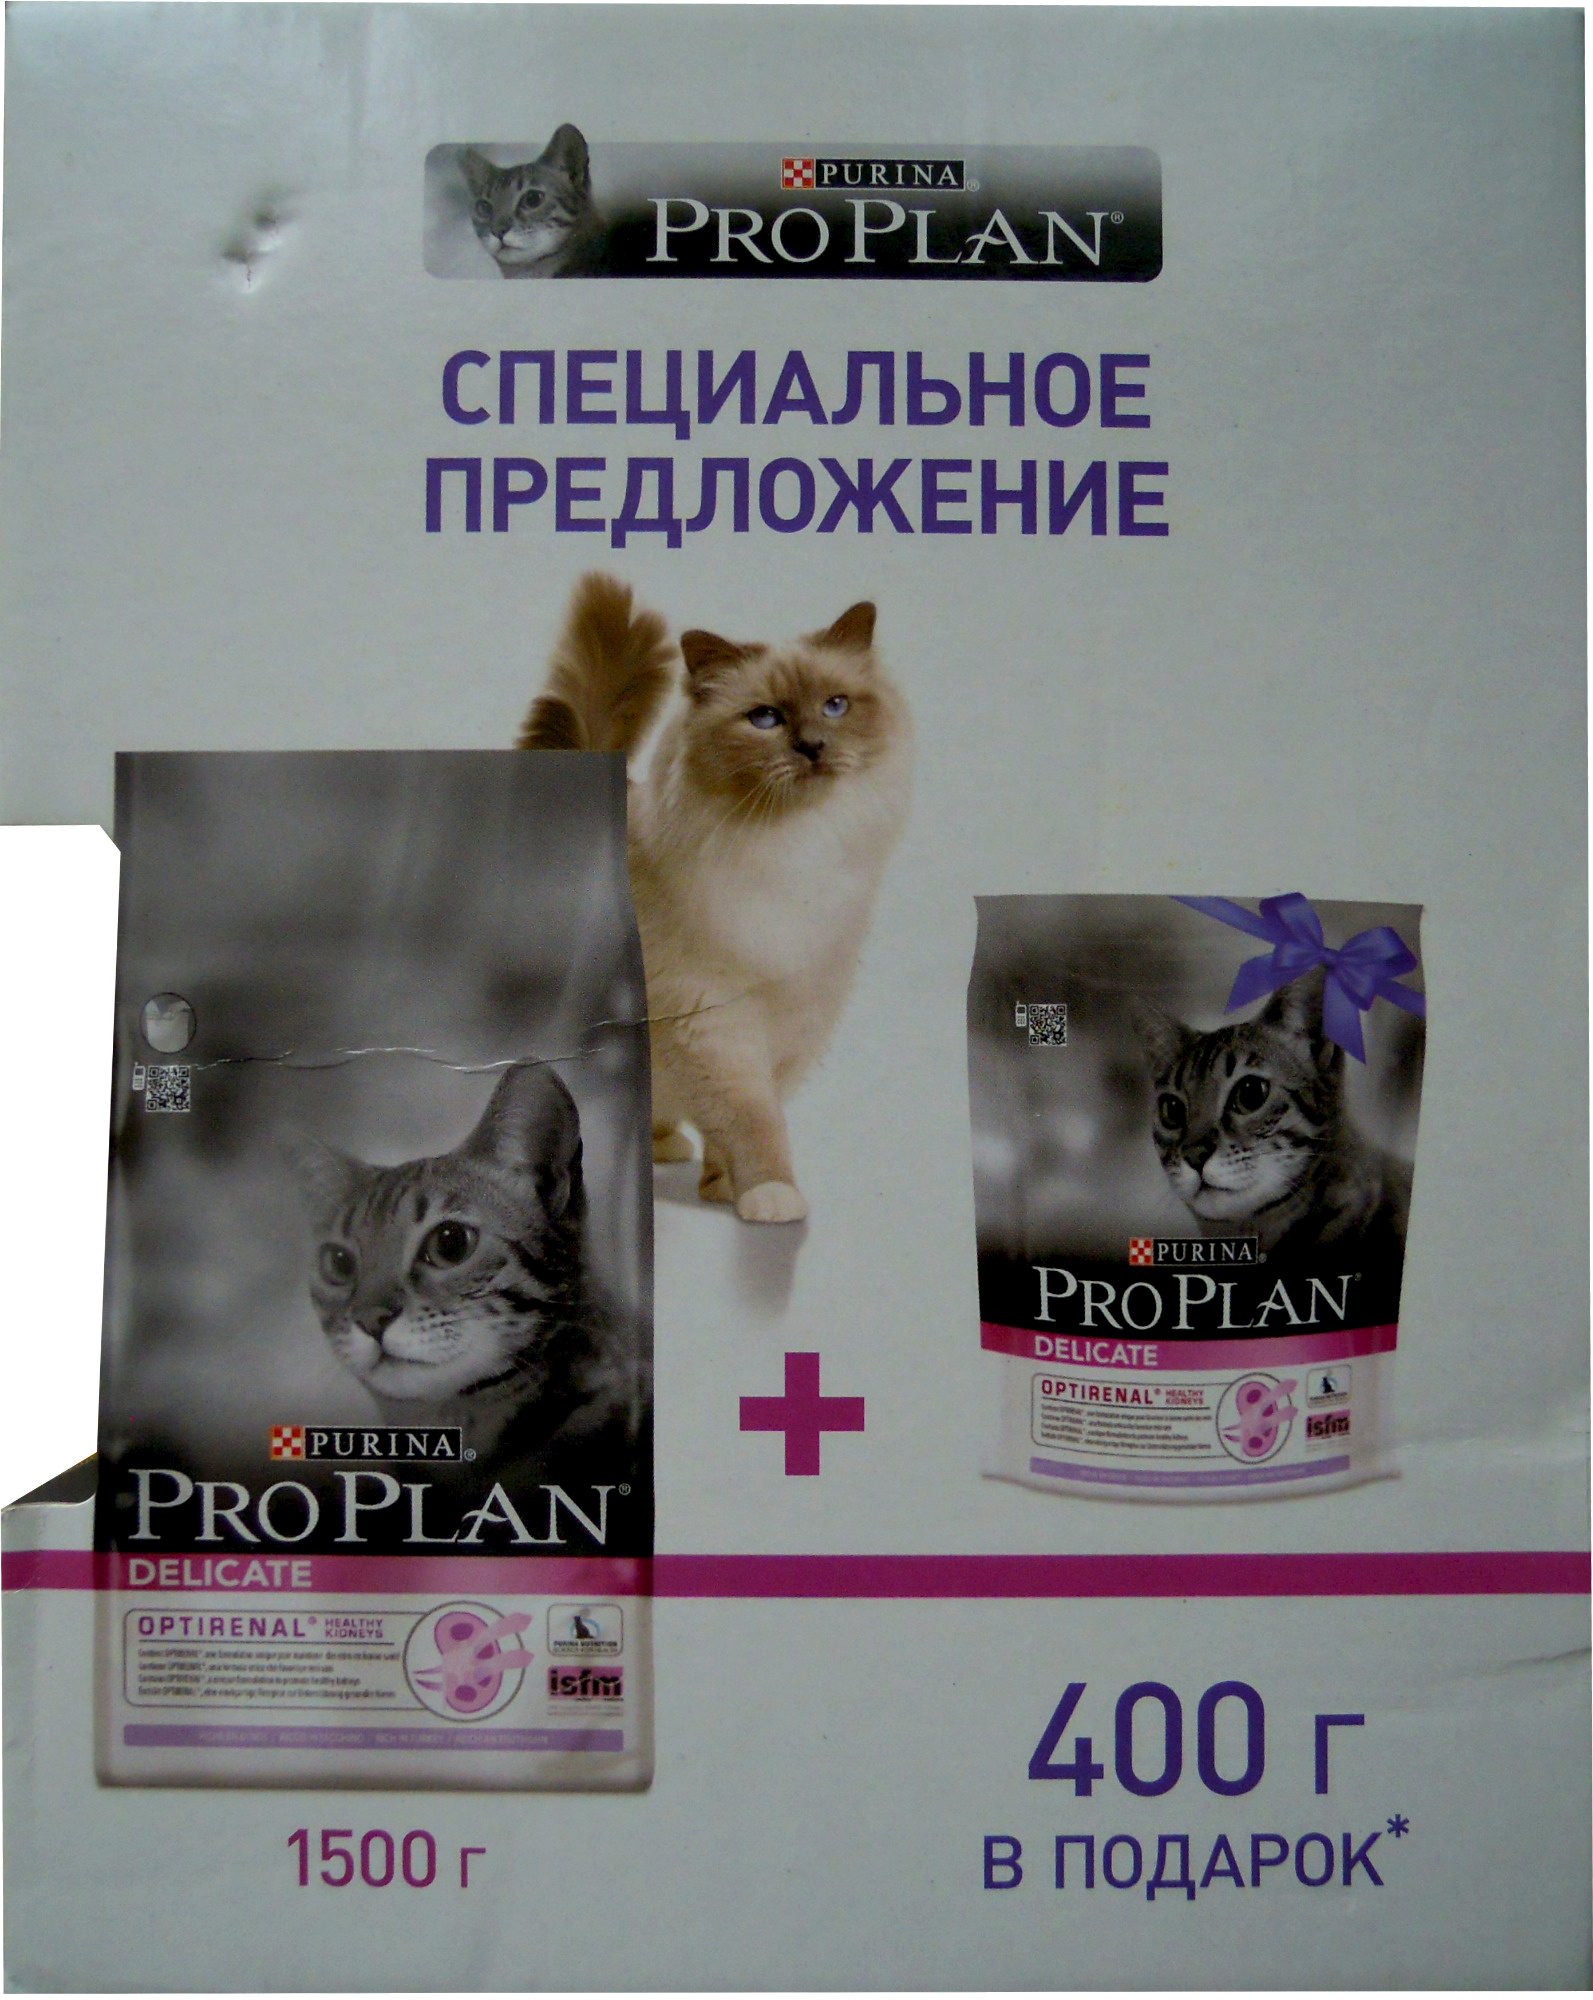 Pro Plan Delicate - Product - ru